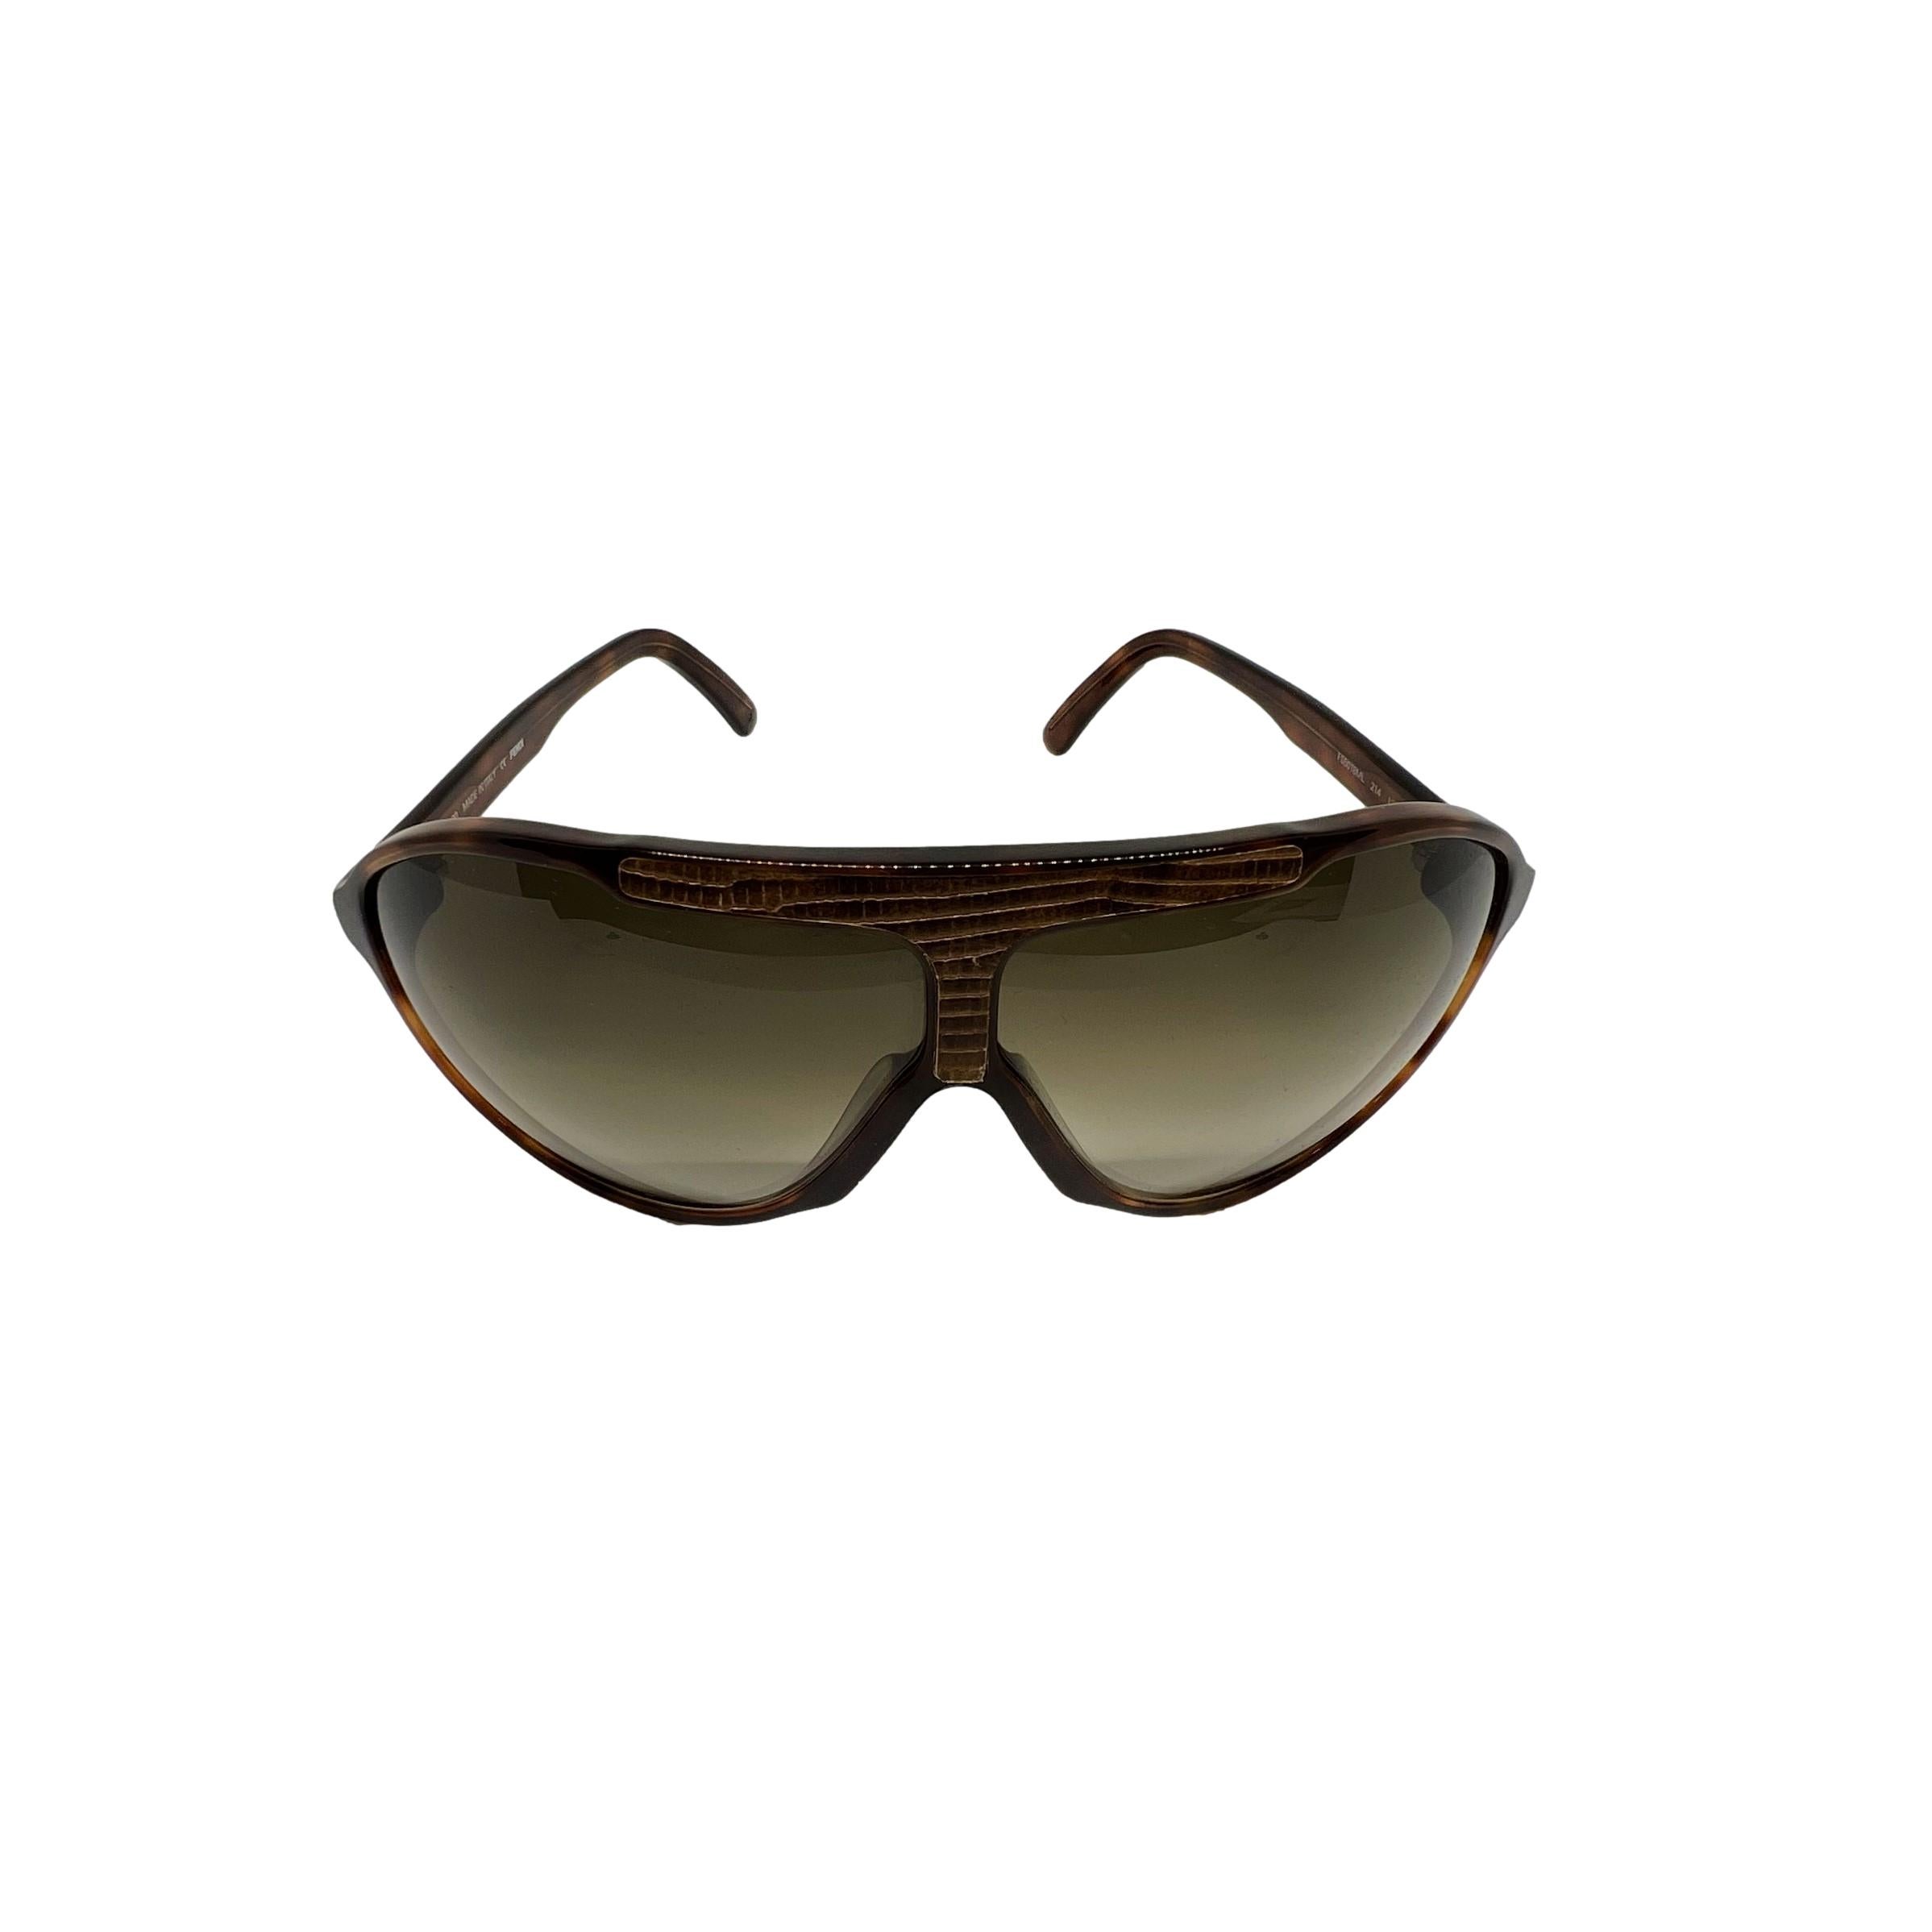 New Fendi Unisex Sunglasses with Case 3